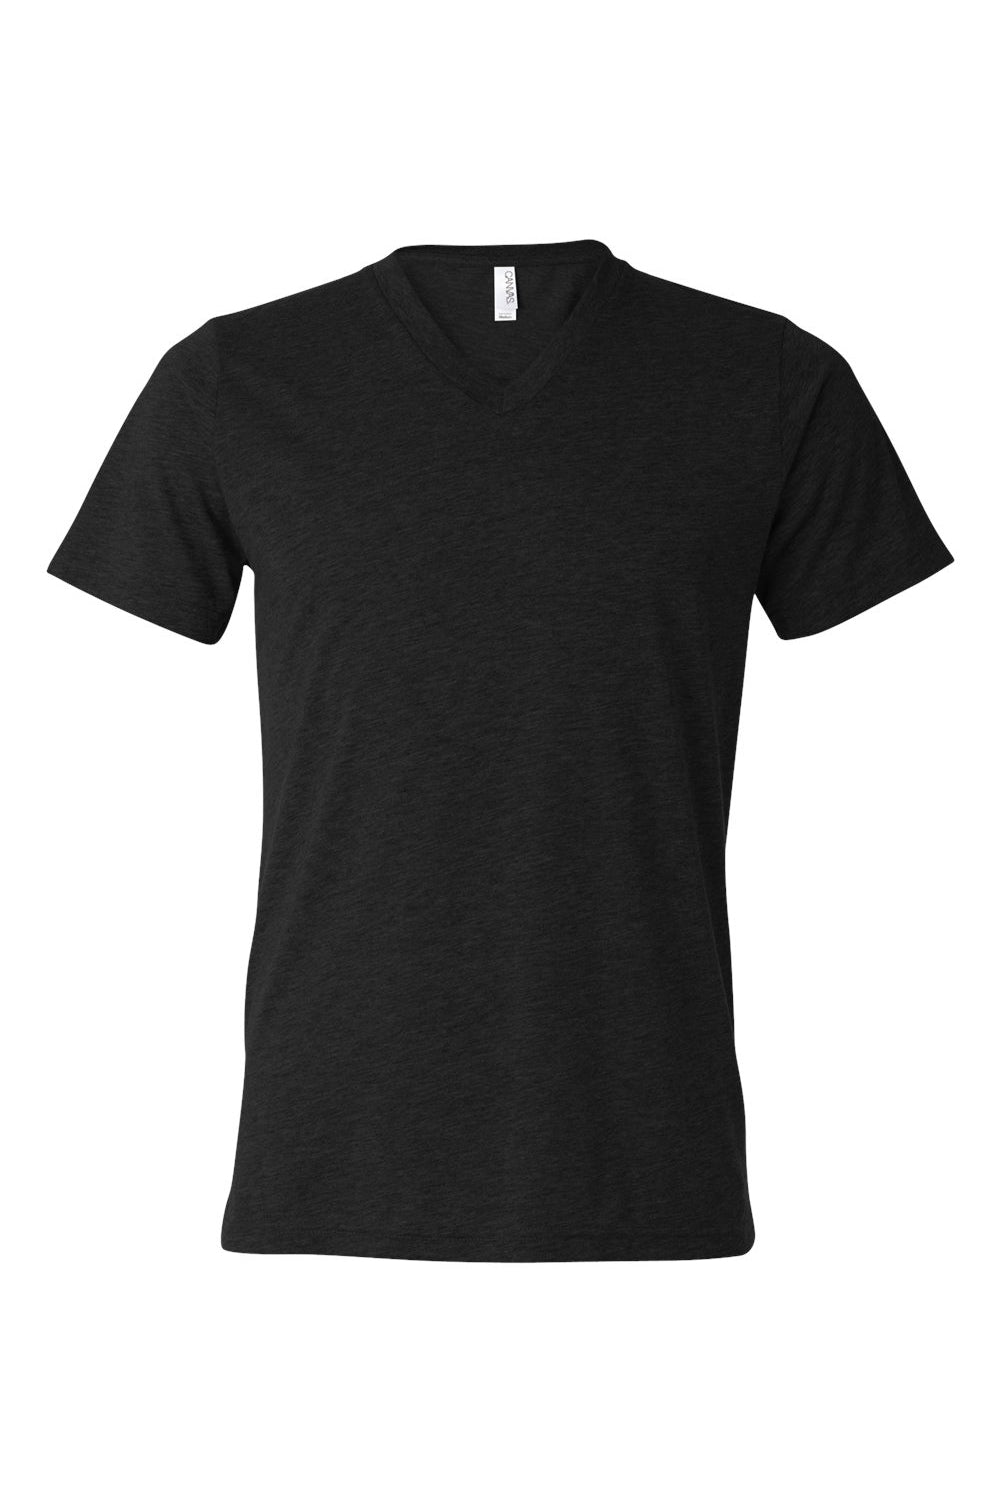 Bella + Canvas BC3415/3415C/3415 Mens Short Sleeve V-Neck T-Shirt Heather Black Flat Front